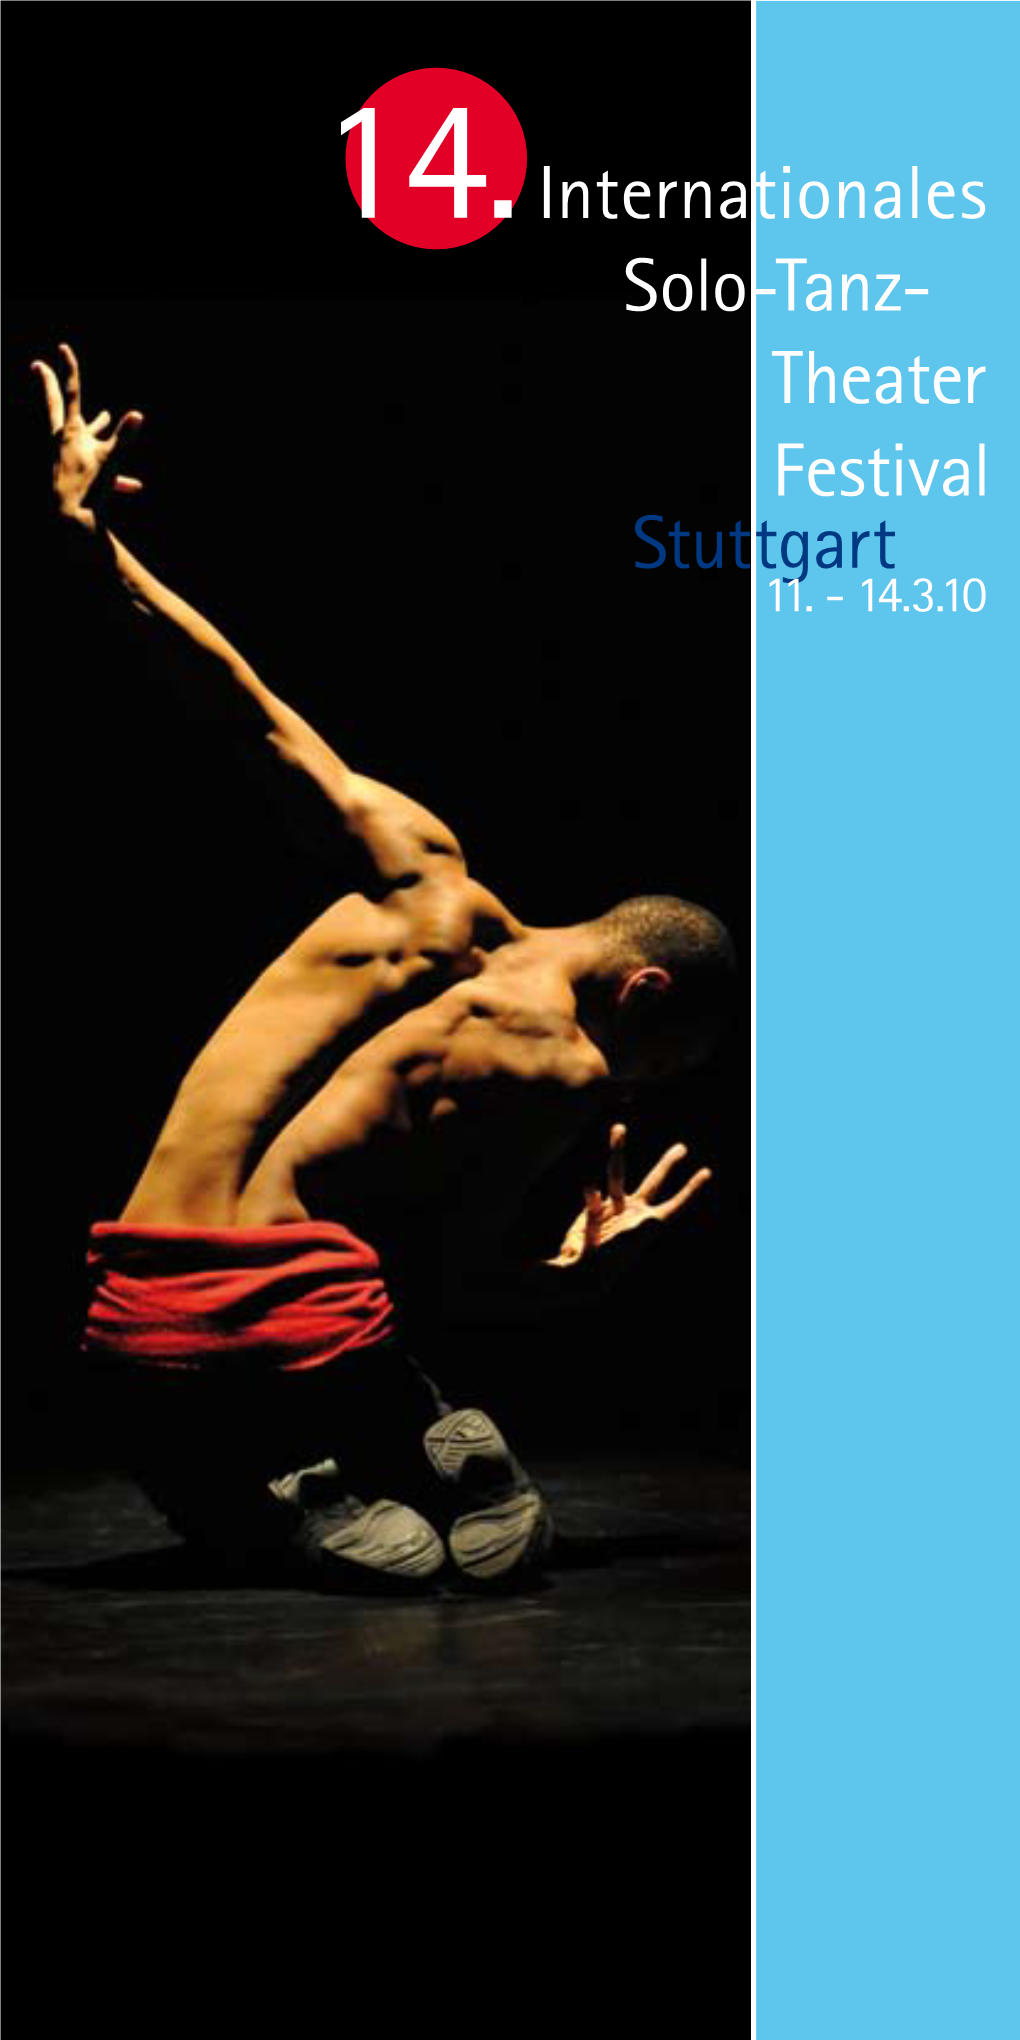 Stuttgart Internationales Solo-Tanz- Theater Festival